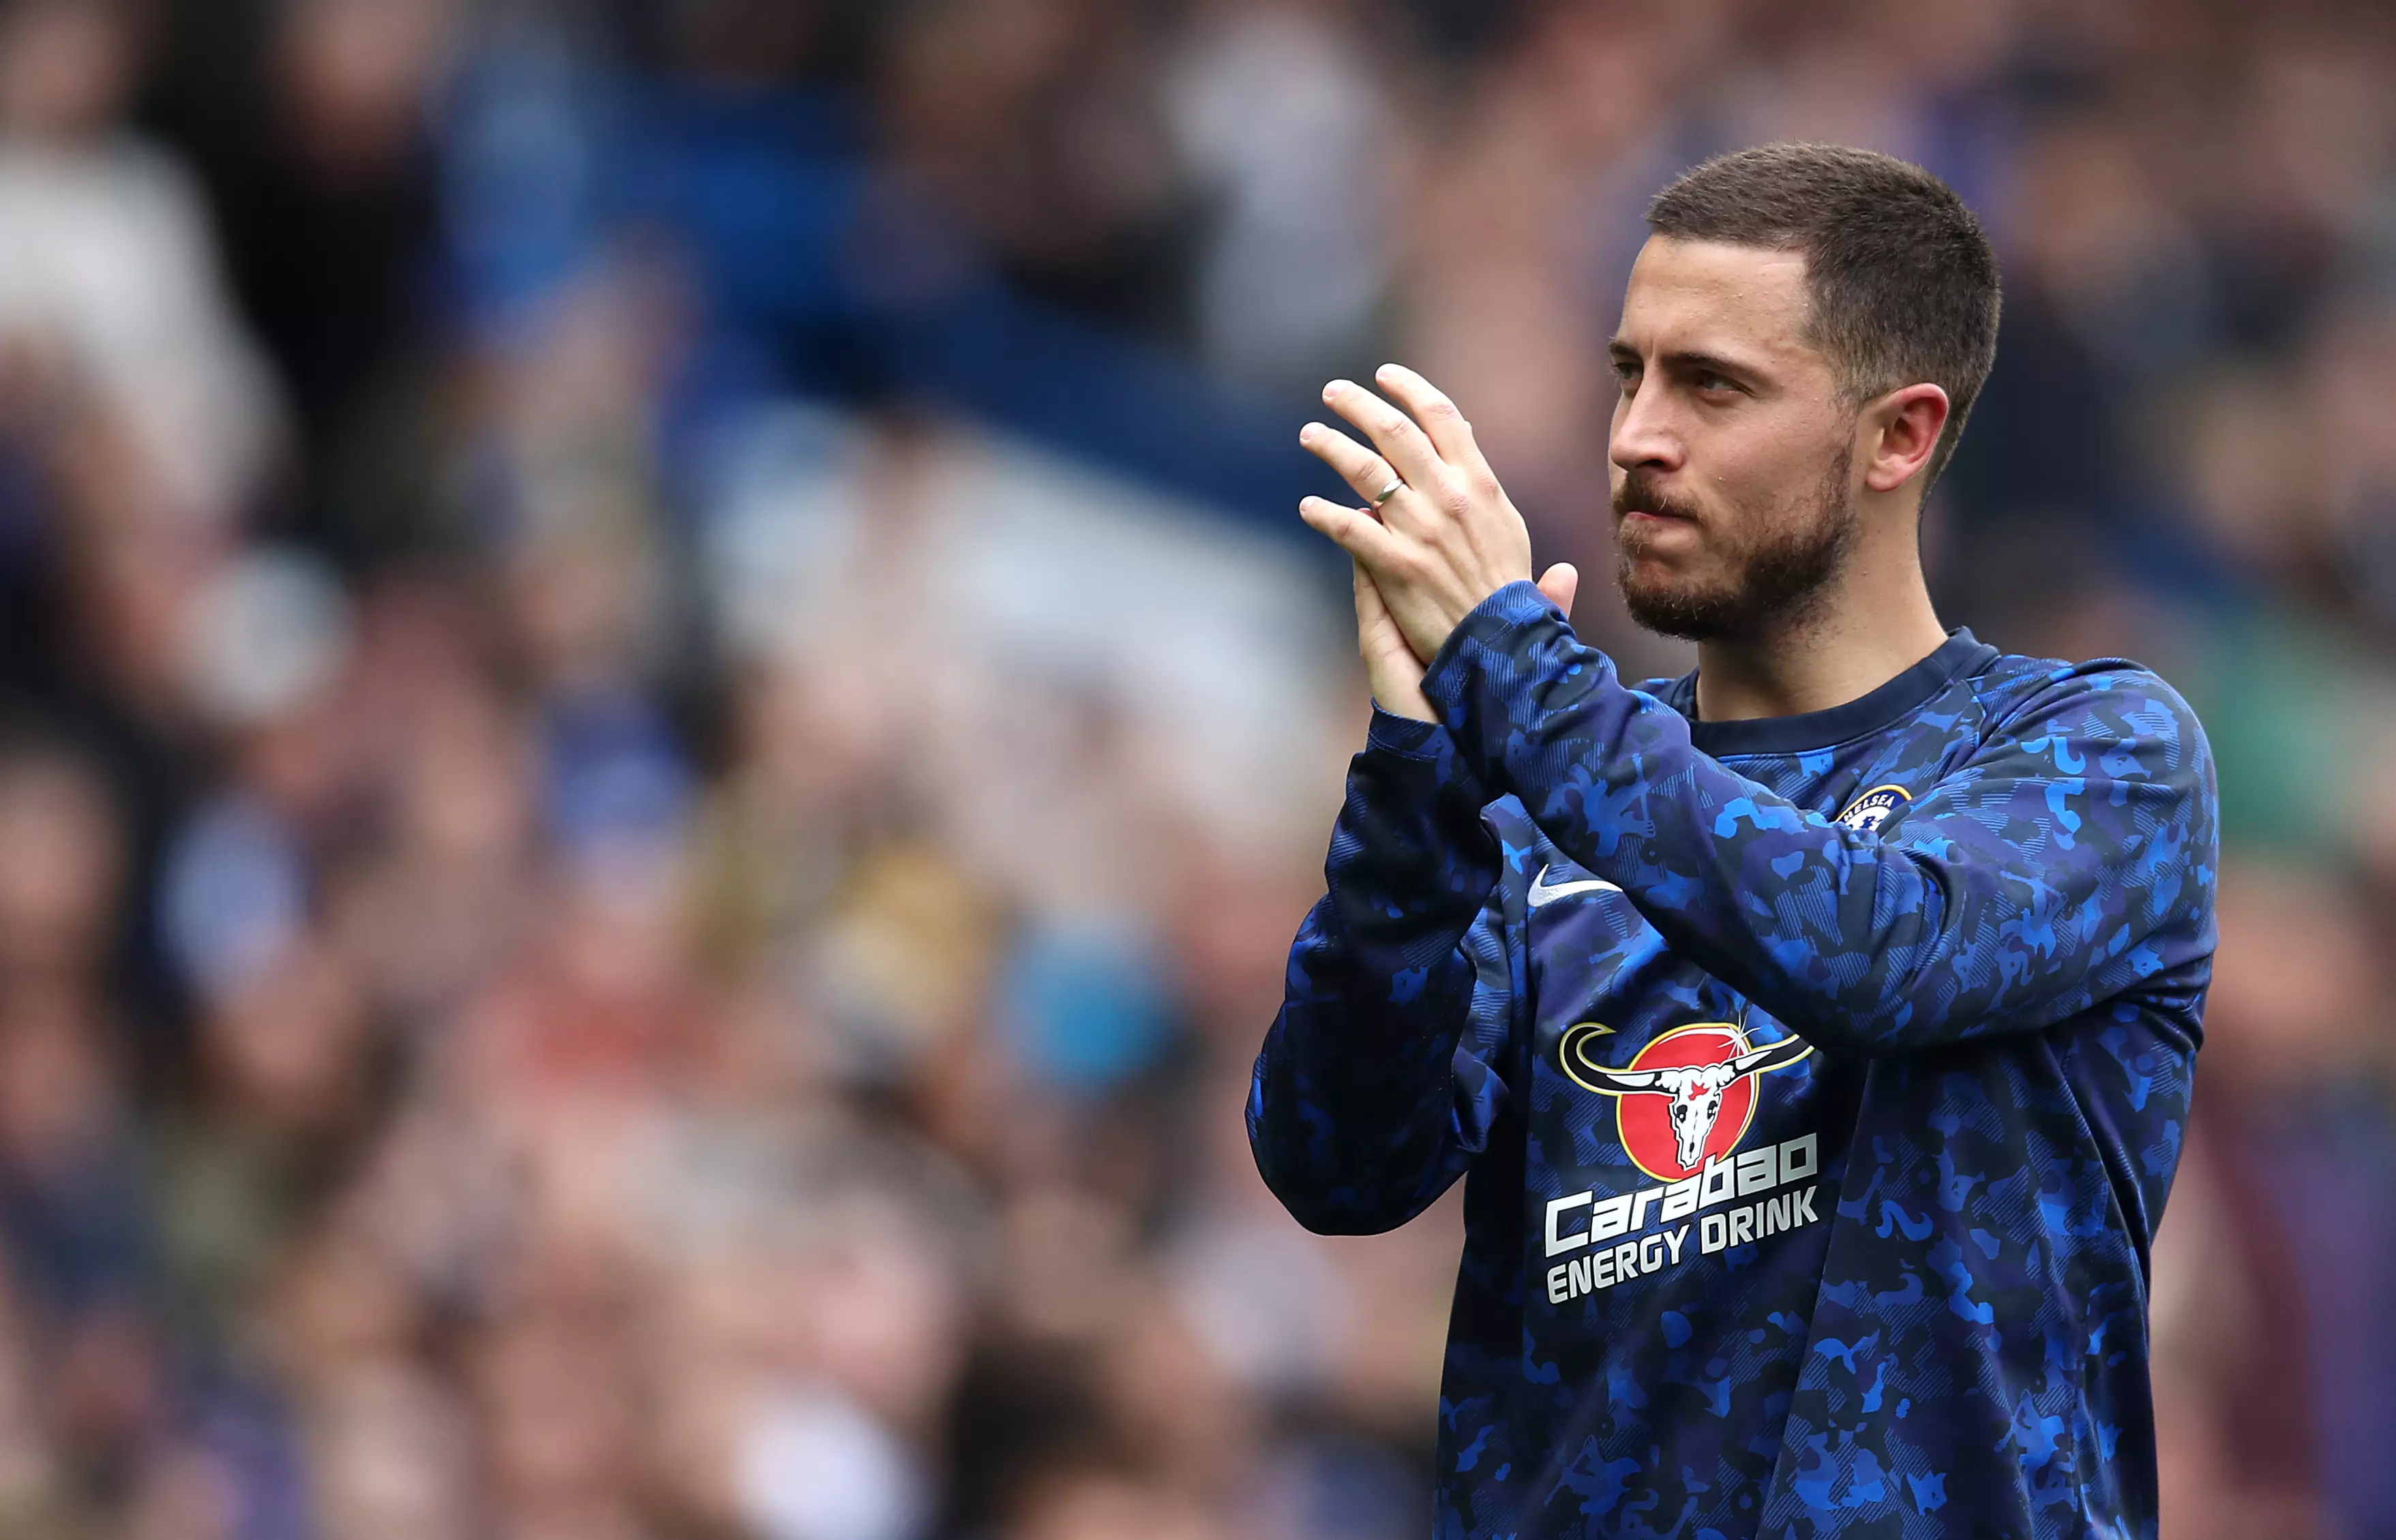 Hazard may have already said goodbye to Stamford Bridge. Image: PA Images